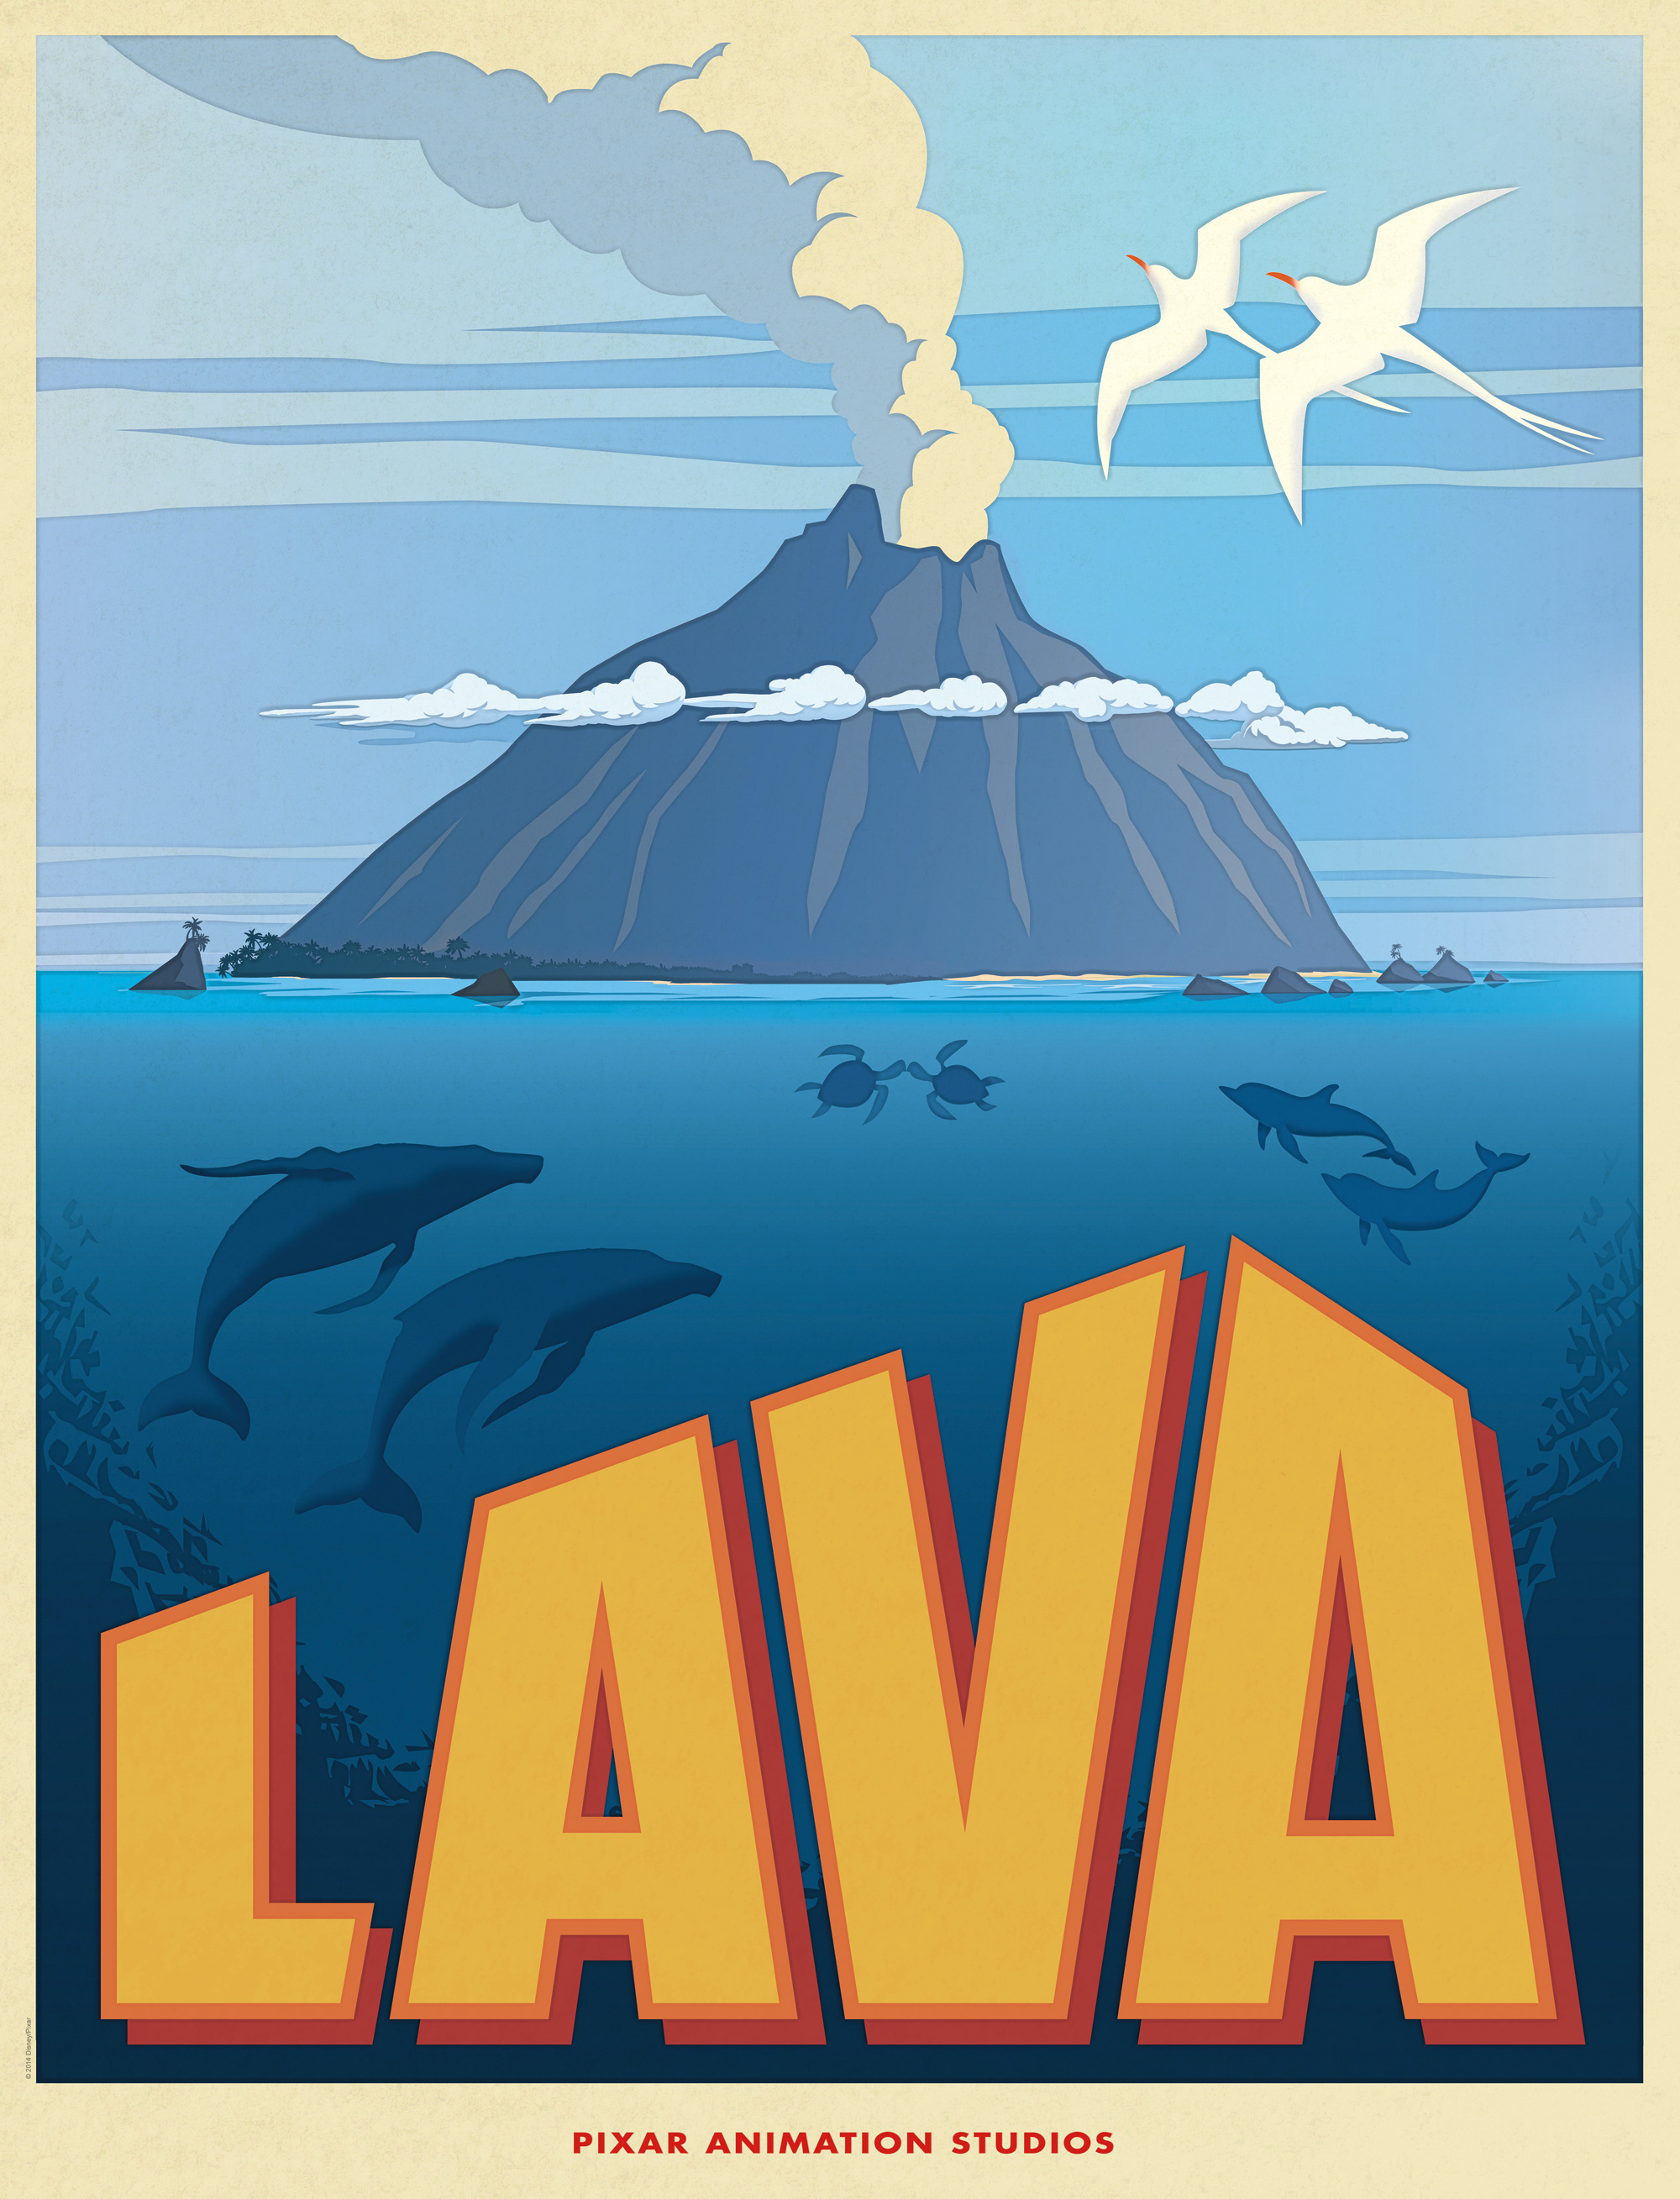 lava-movie-poster-pixar-disney.jpg